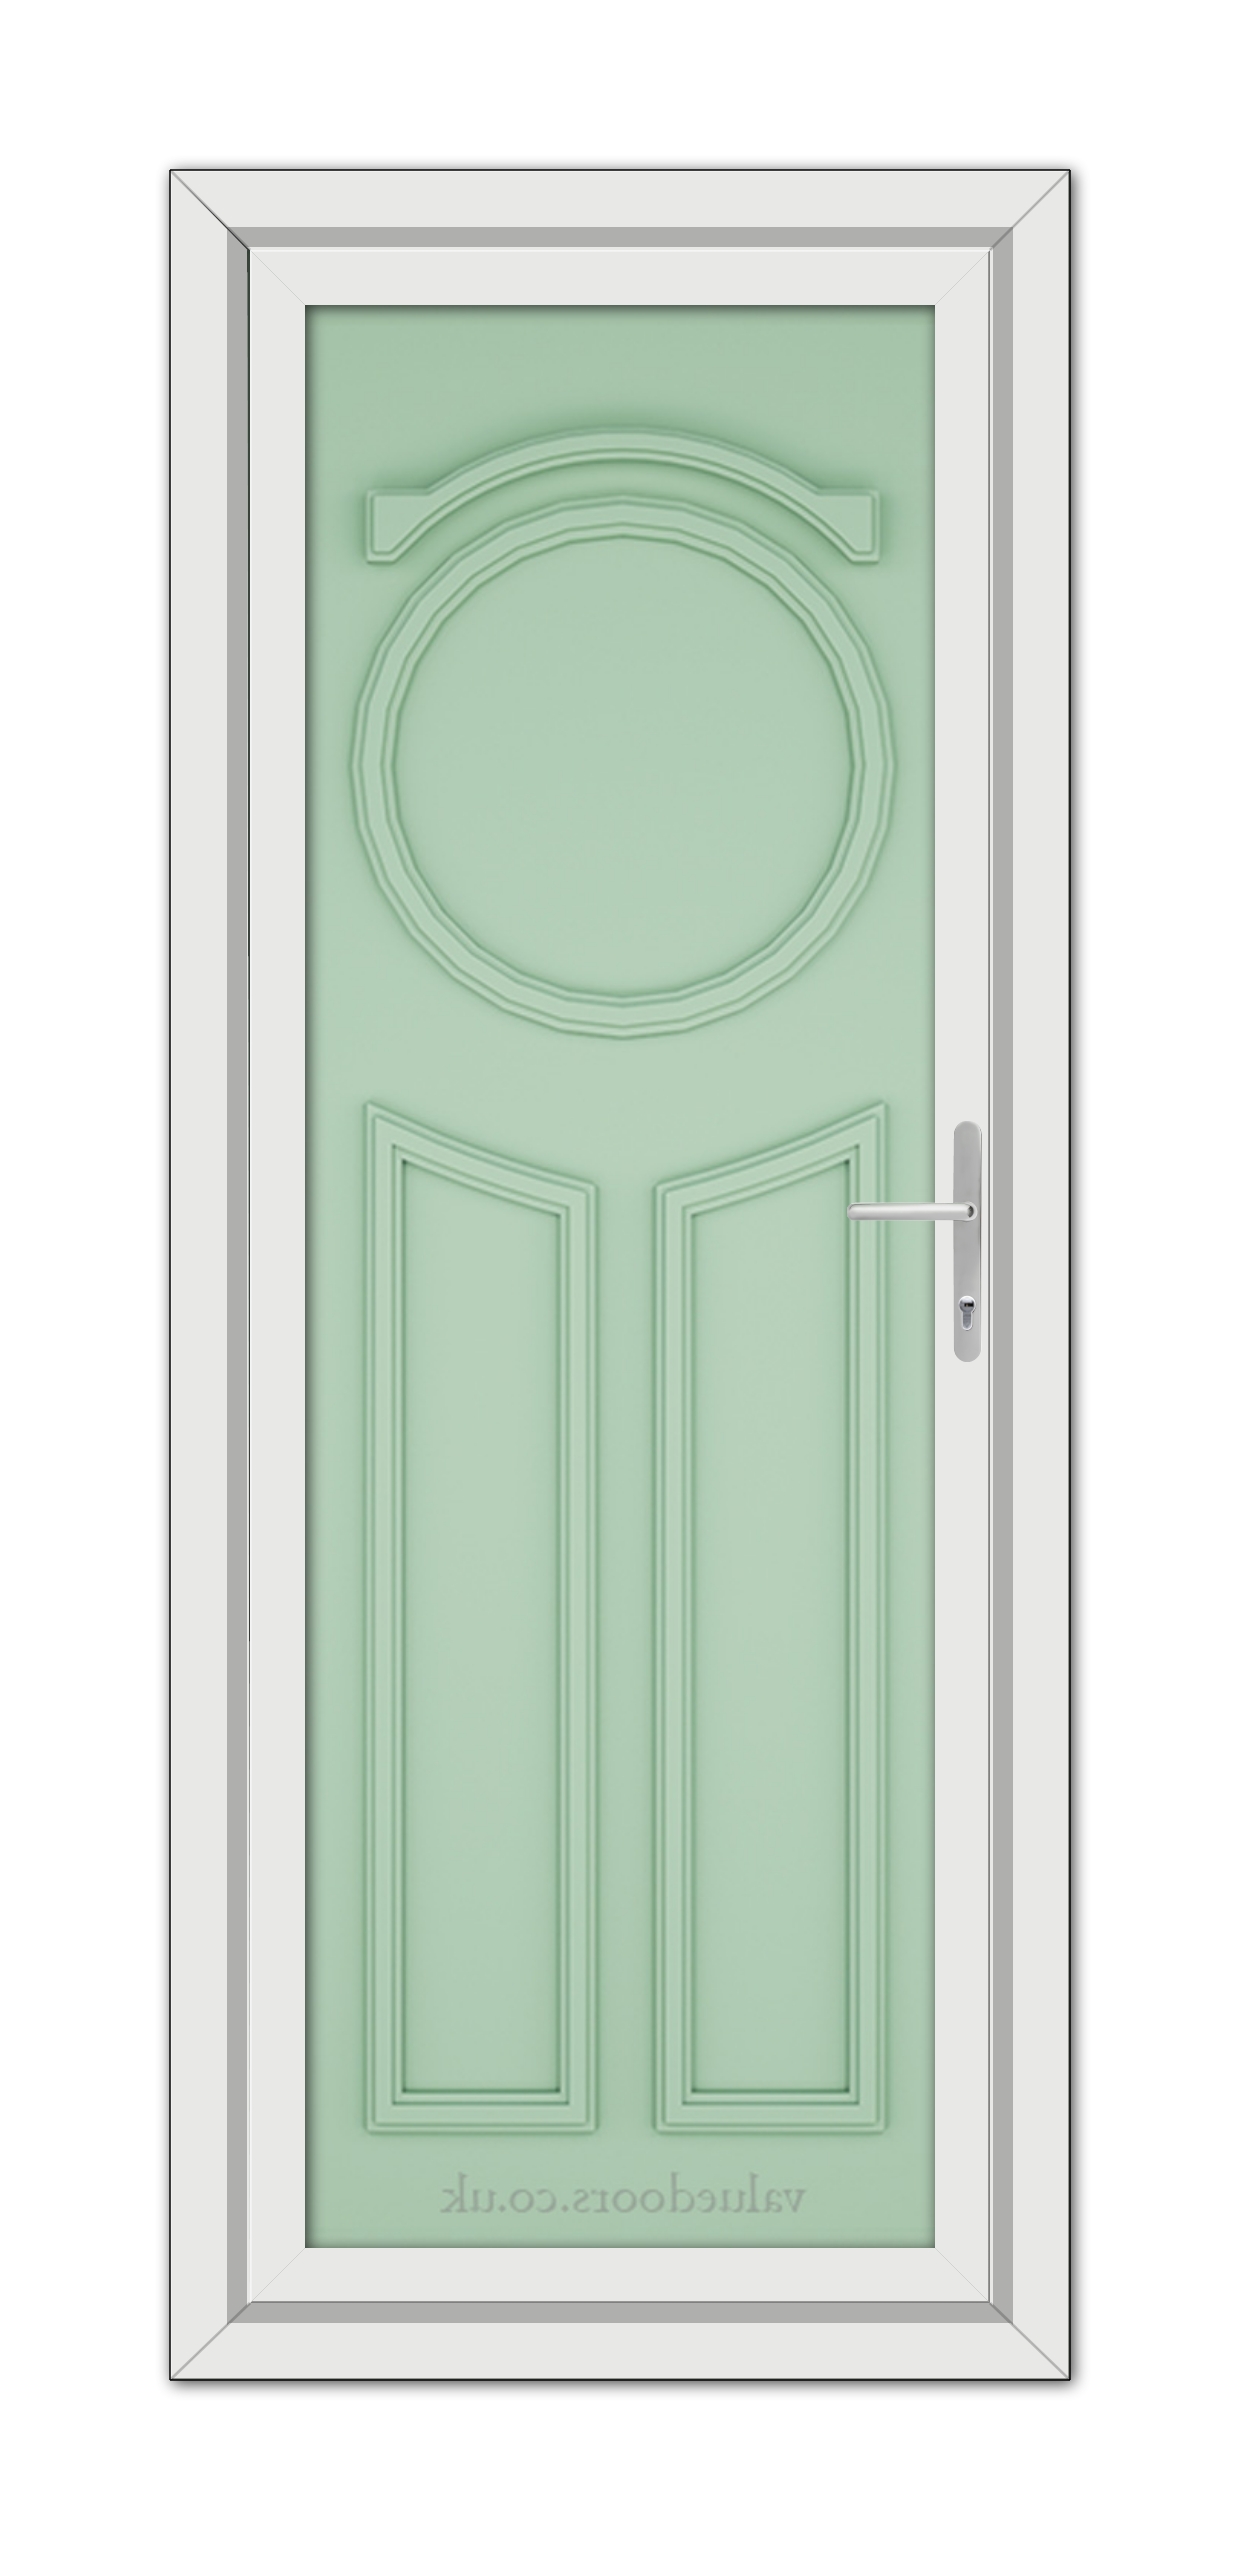 A close-up of a Chartwell Green Blenheim Solid uPVC Door.